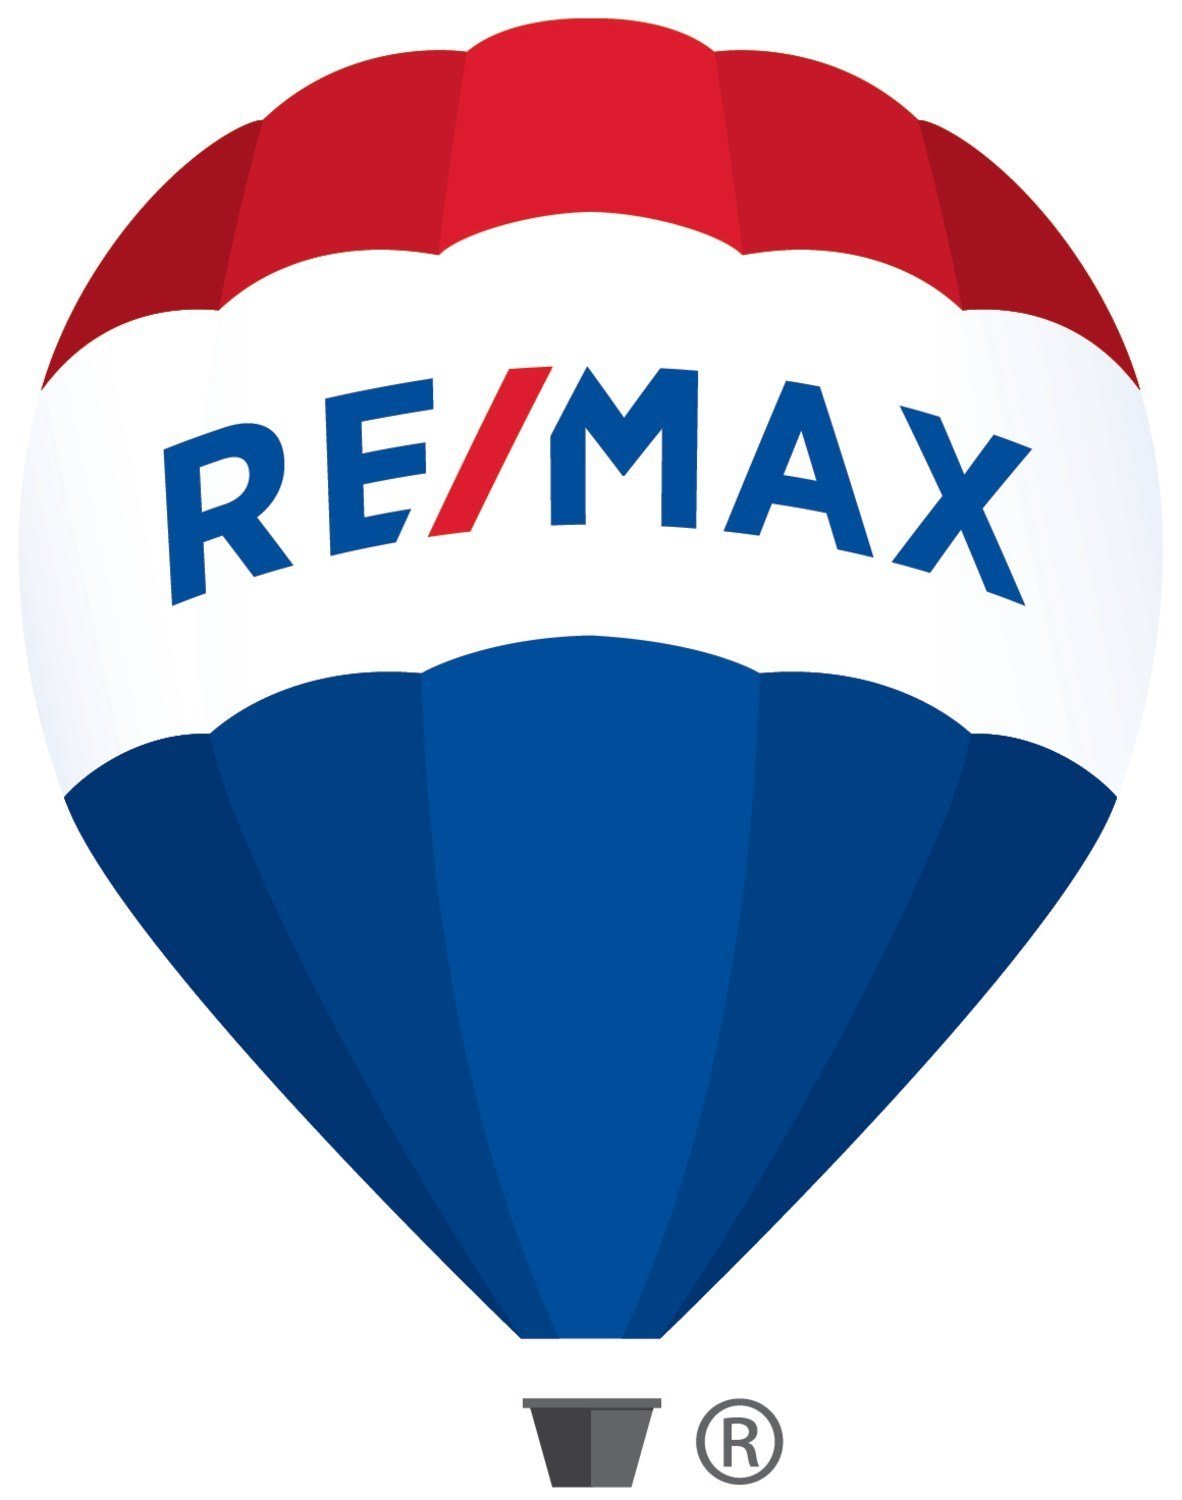 REMAX_Logo